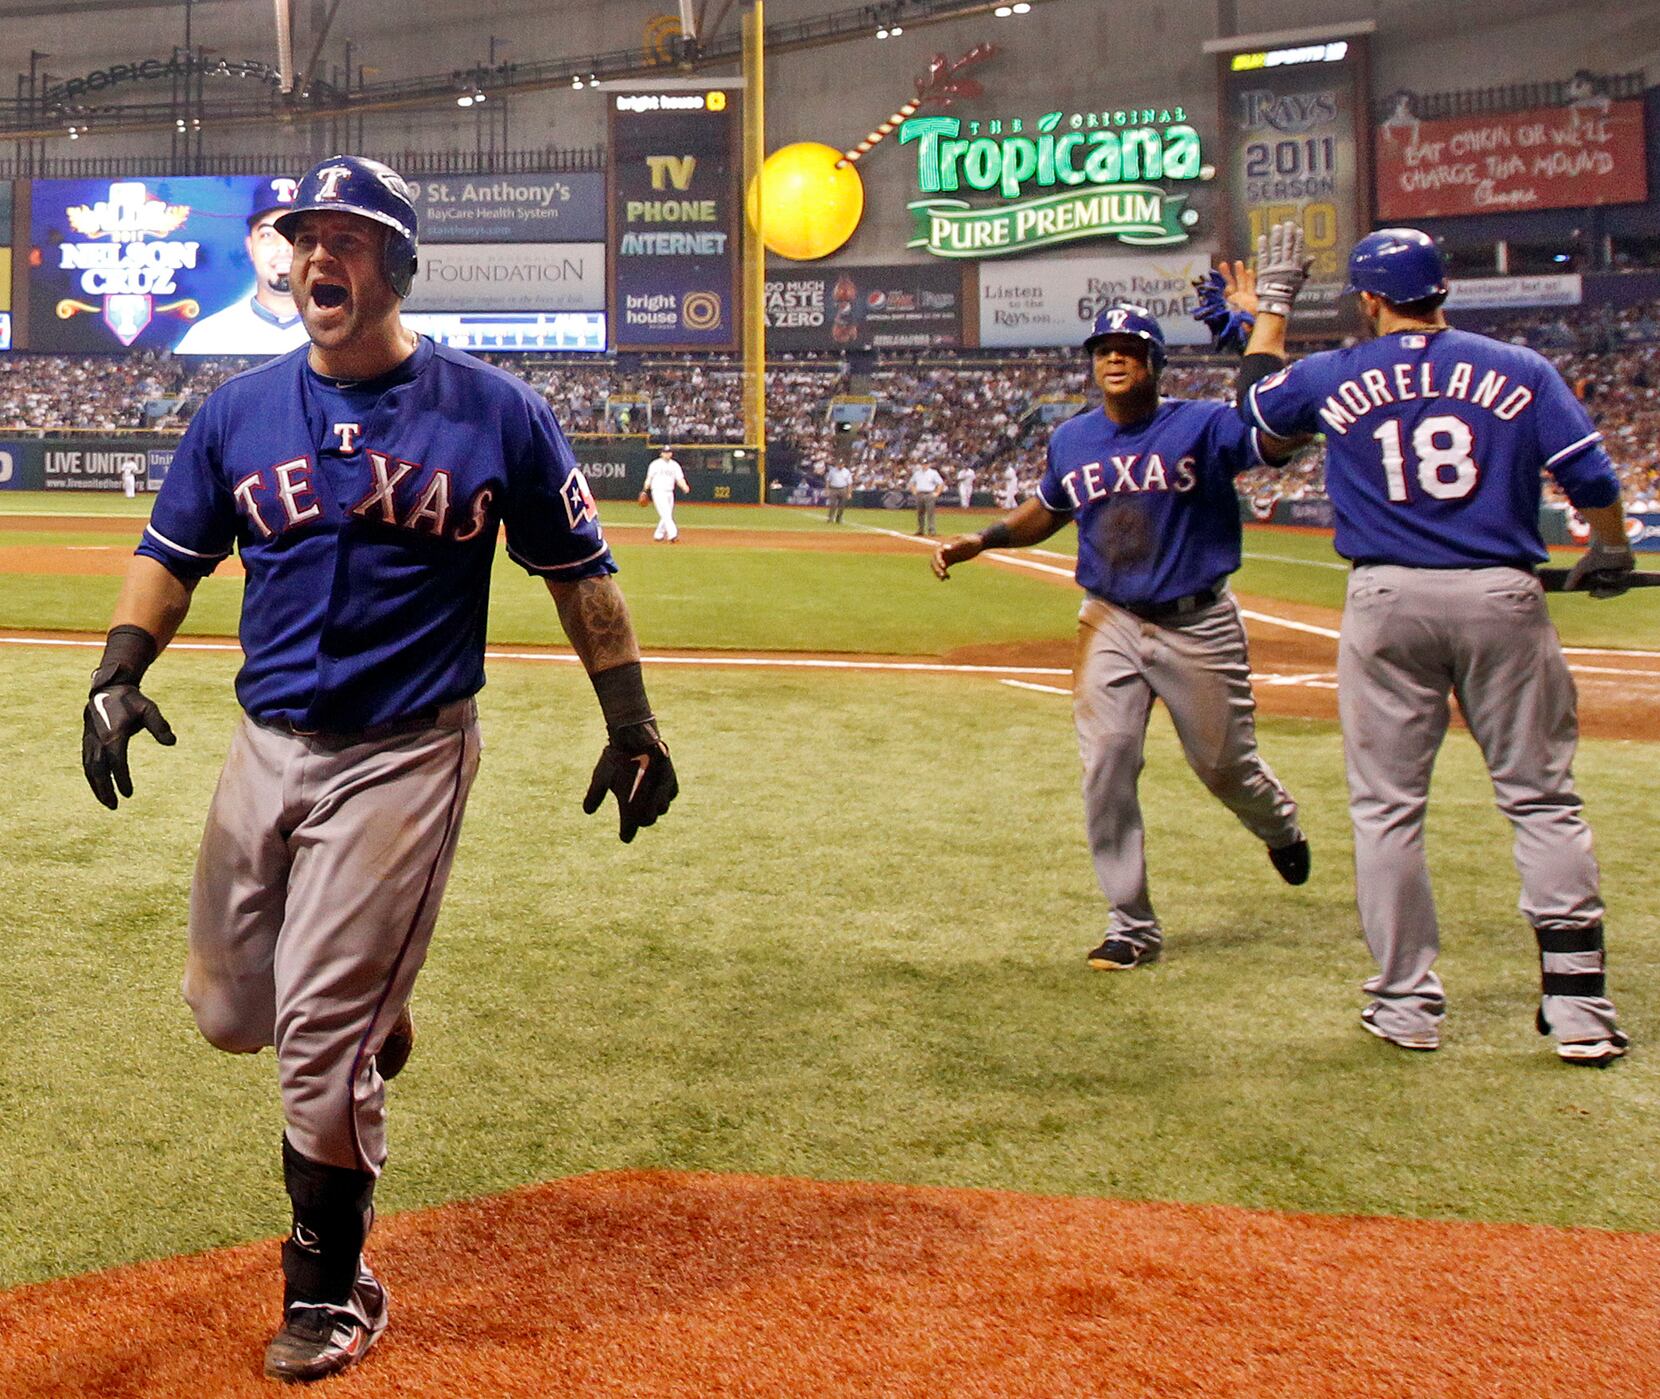 Photo: Rangers second baseman Ian Kinsler tags out St. Louis